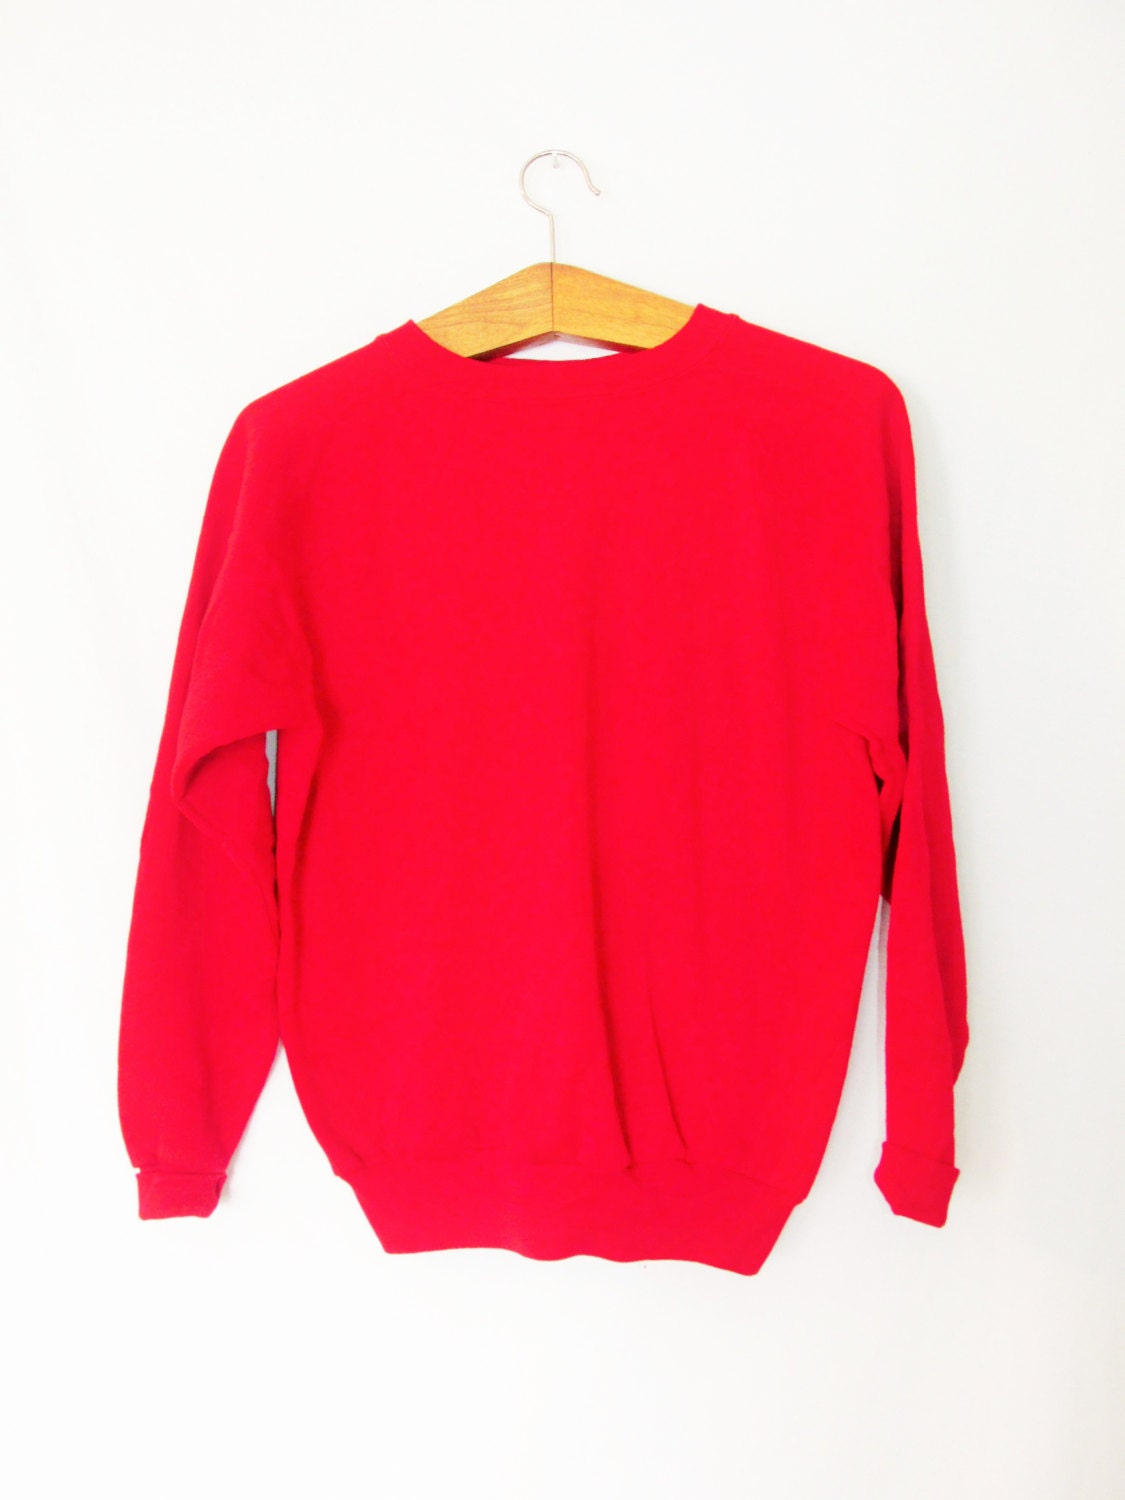 Vintage Plain Red Sweatshirt